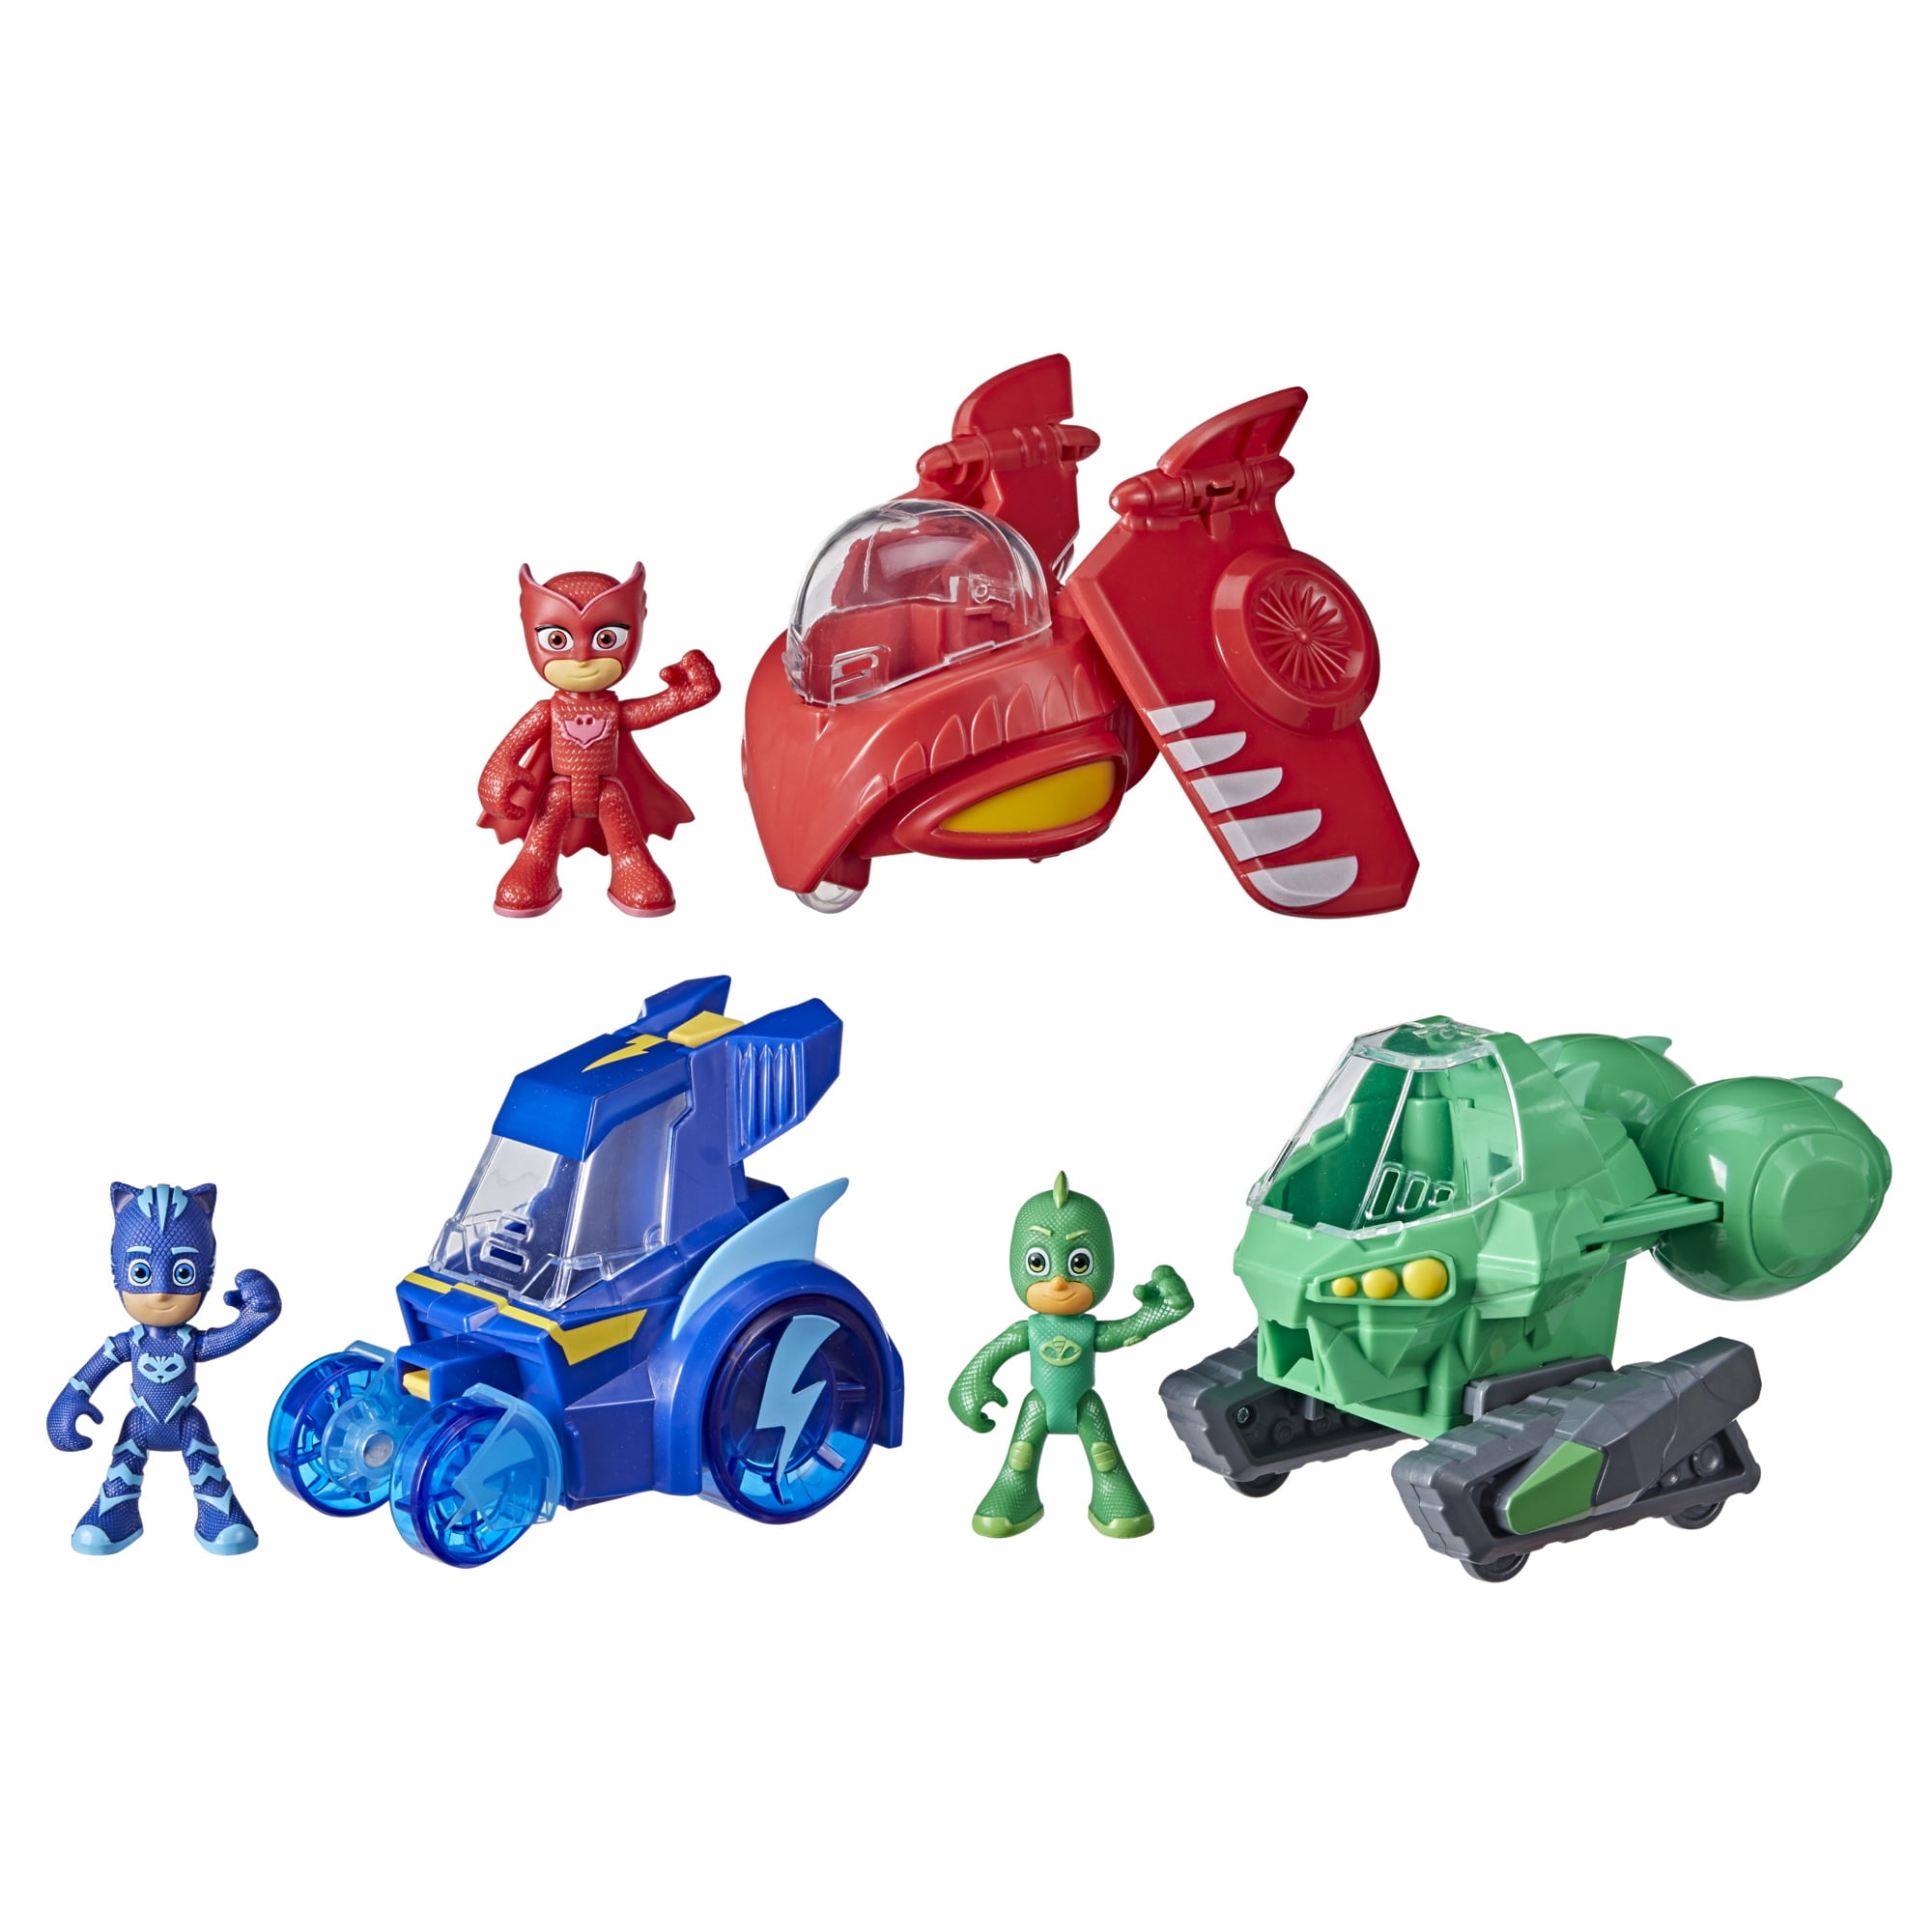 PJ Masks Gekko Transforming Action Figures Playset Kids Toy for sale online 